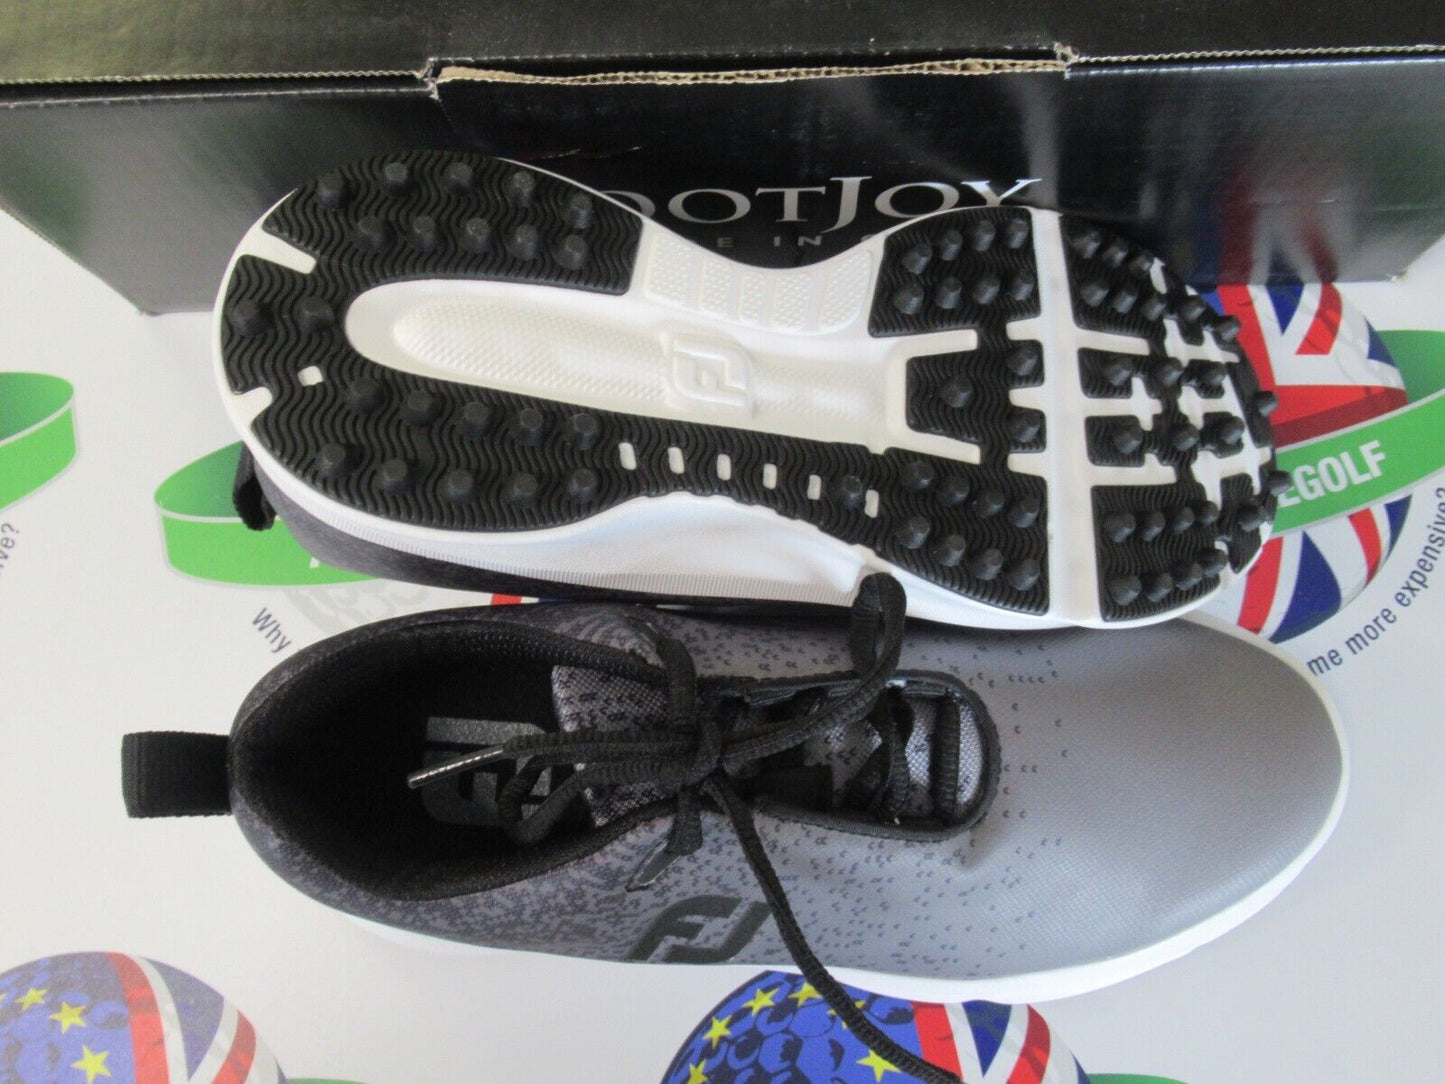 footjoy leisure ladies golf shoes charcoal/grey/white 92925k uk size 4 medium